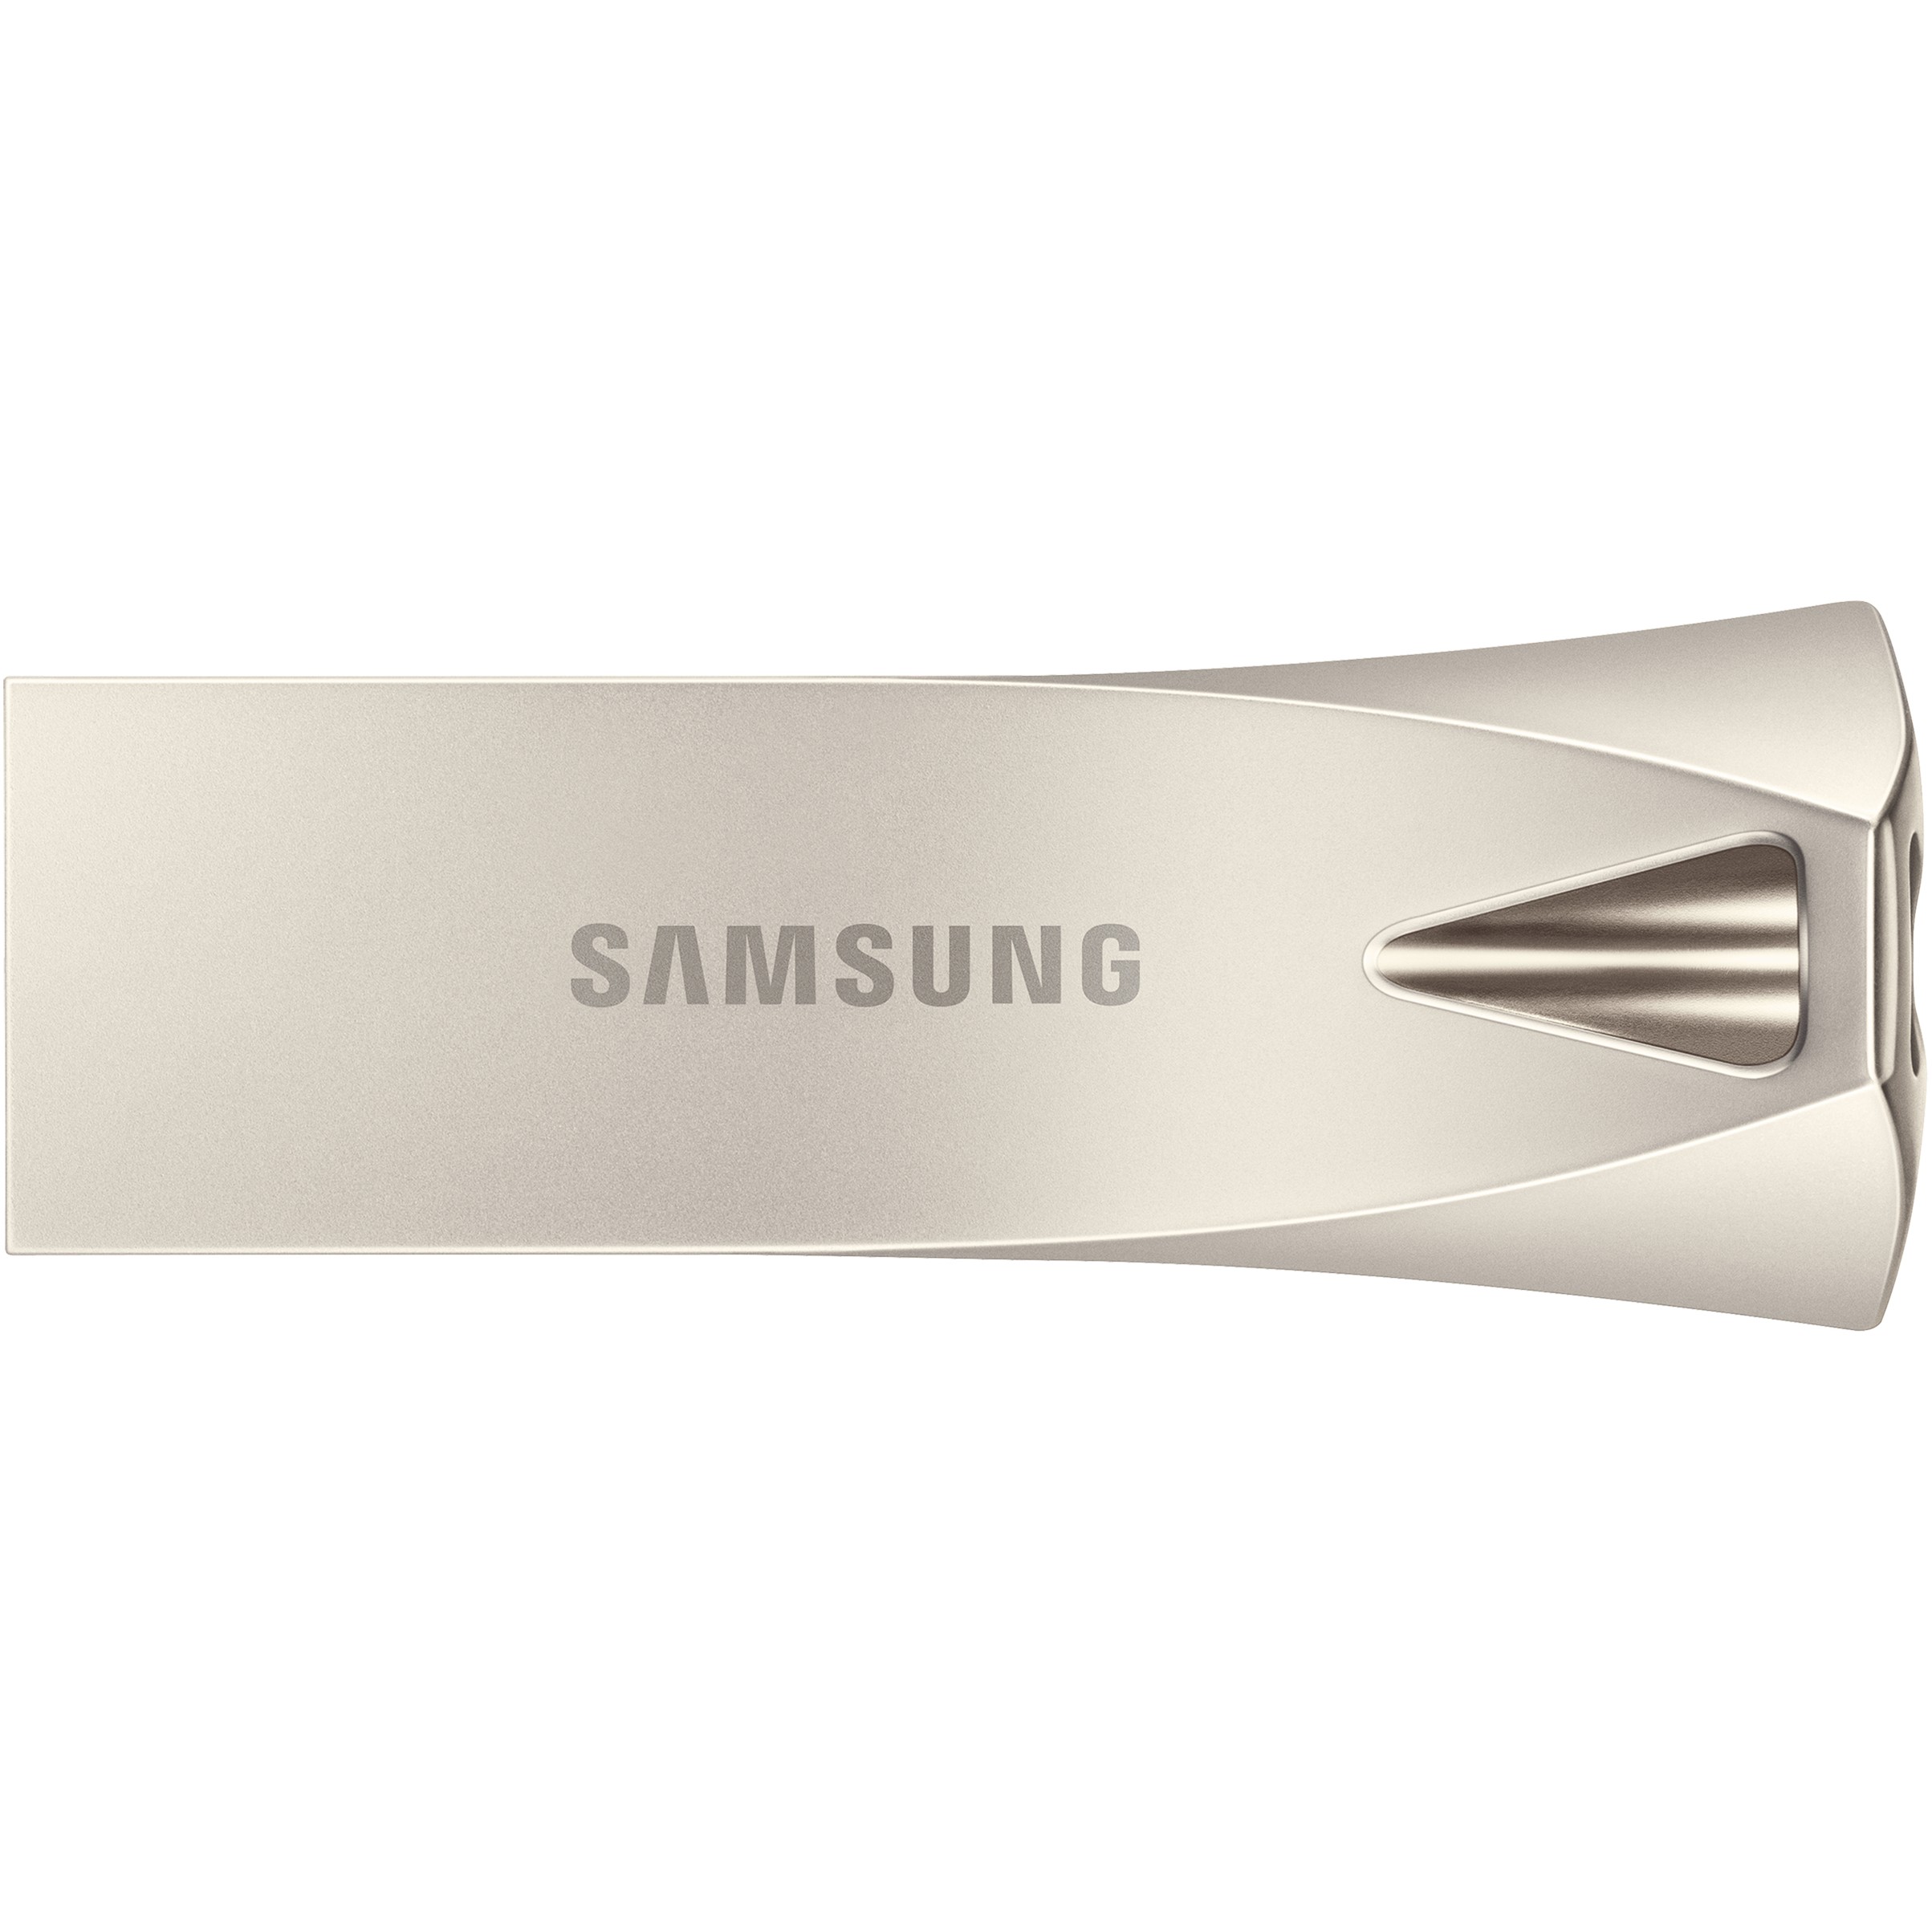 SAMSUNG MUF-64BE3/APC, USB-Sticks, Samsung MUF-64BE USB  (BILD1)